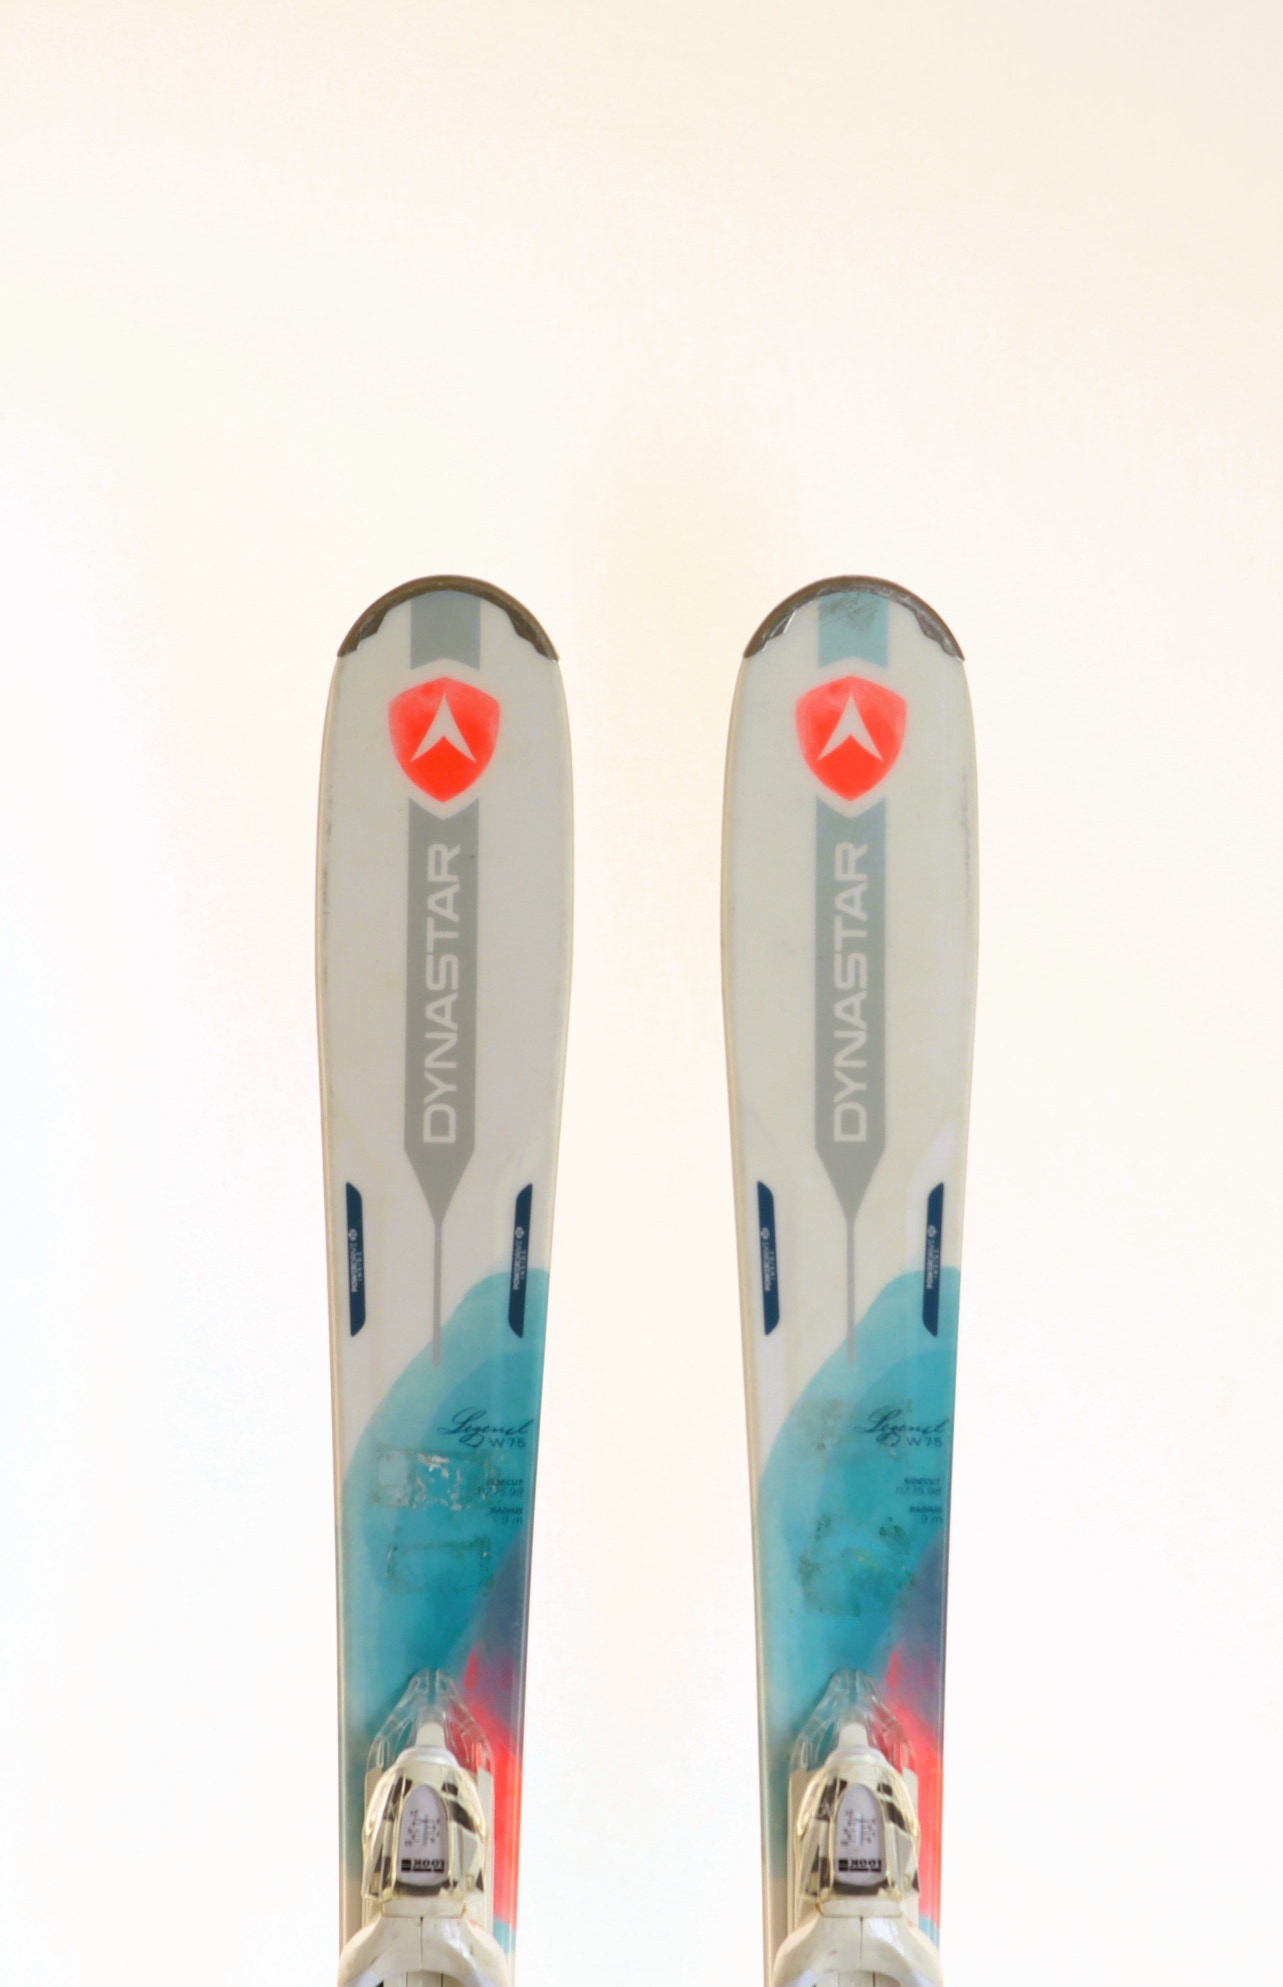 Used 2019 Dynastar Legend W75 Demo Ski with Look Xpress 10 Bindings Size 142 (Option 231275)